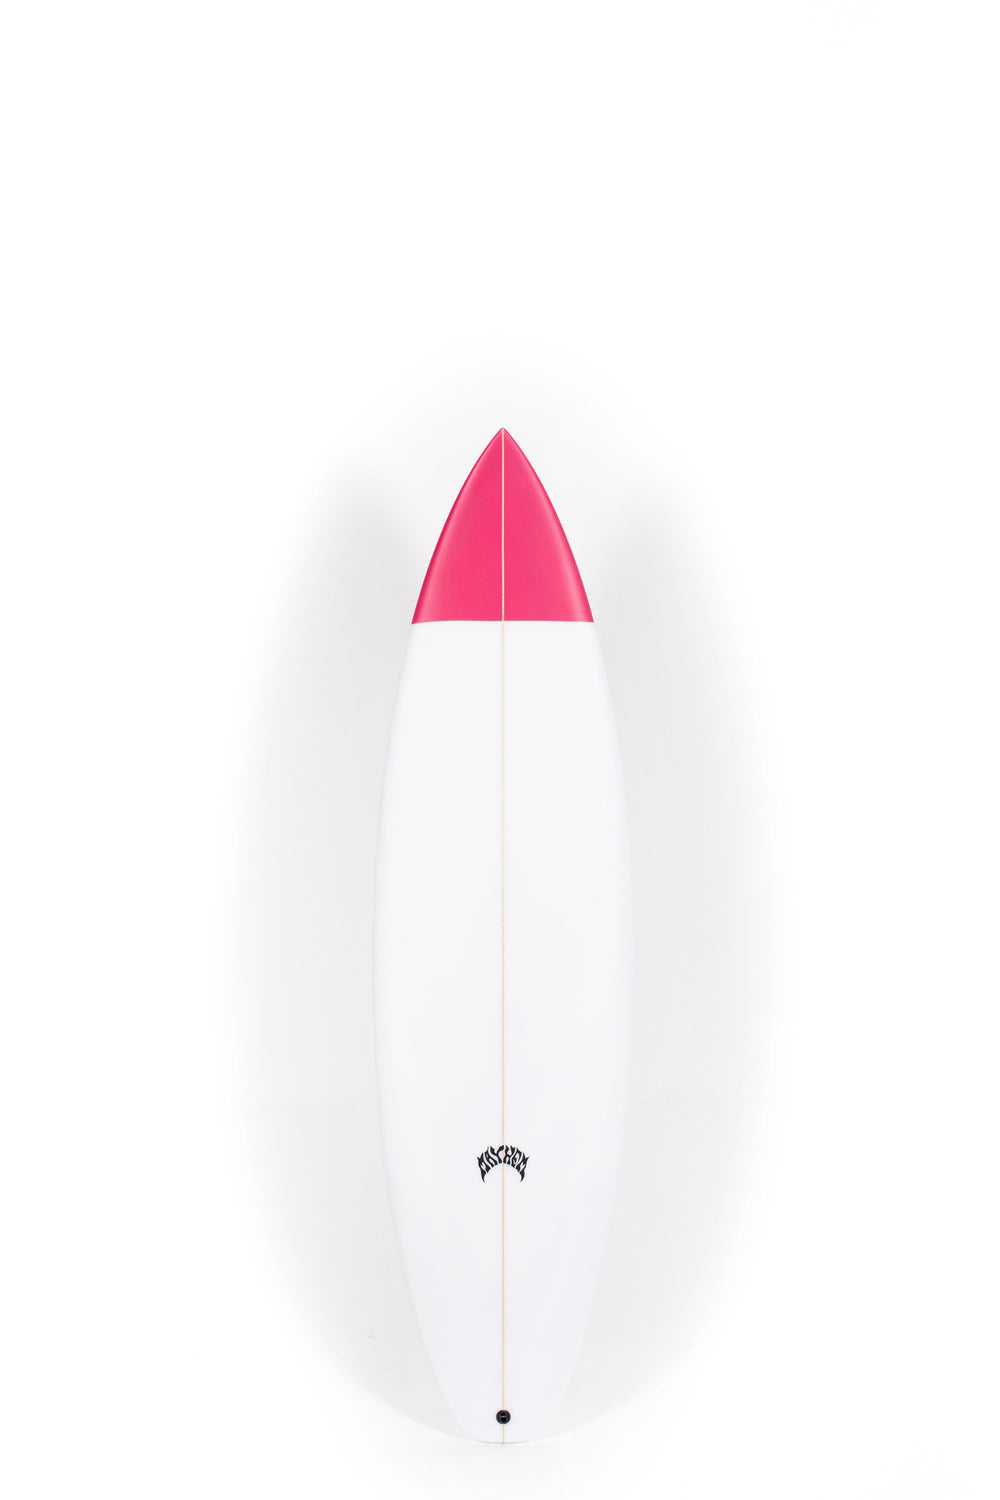 Pukas Surf shop - Lost Surfboards - DRIVER 3.0 by Matt Biolos - 6'4